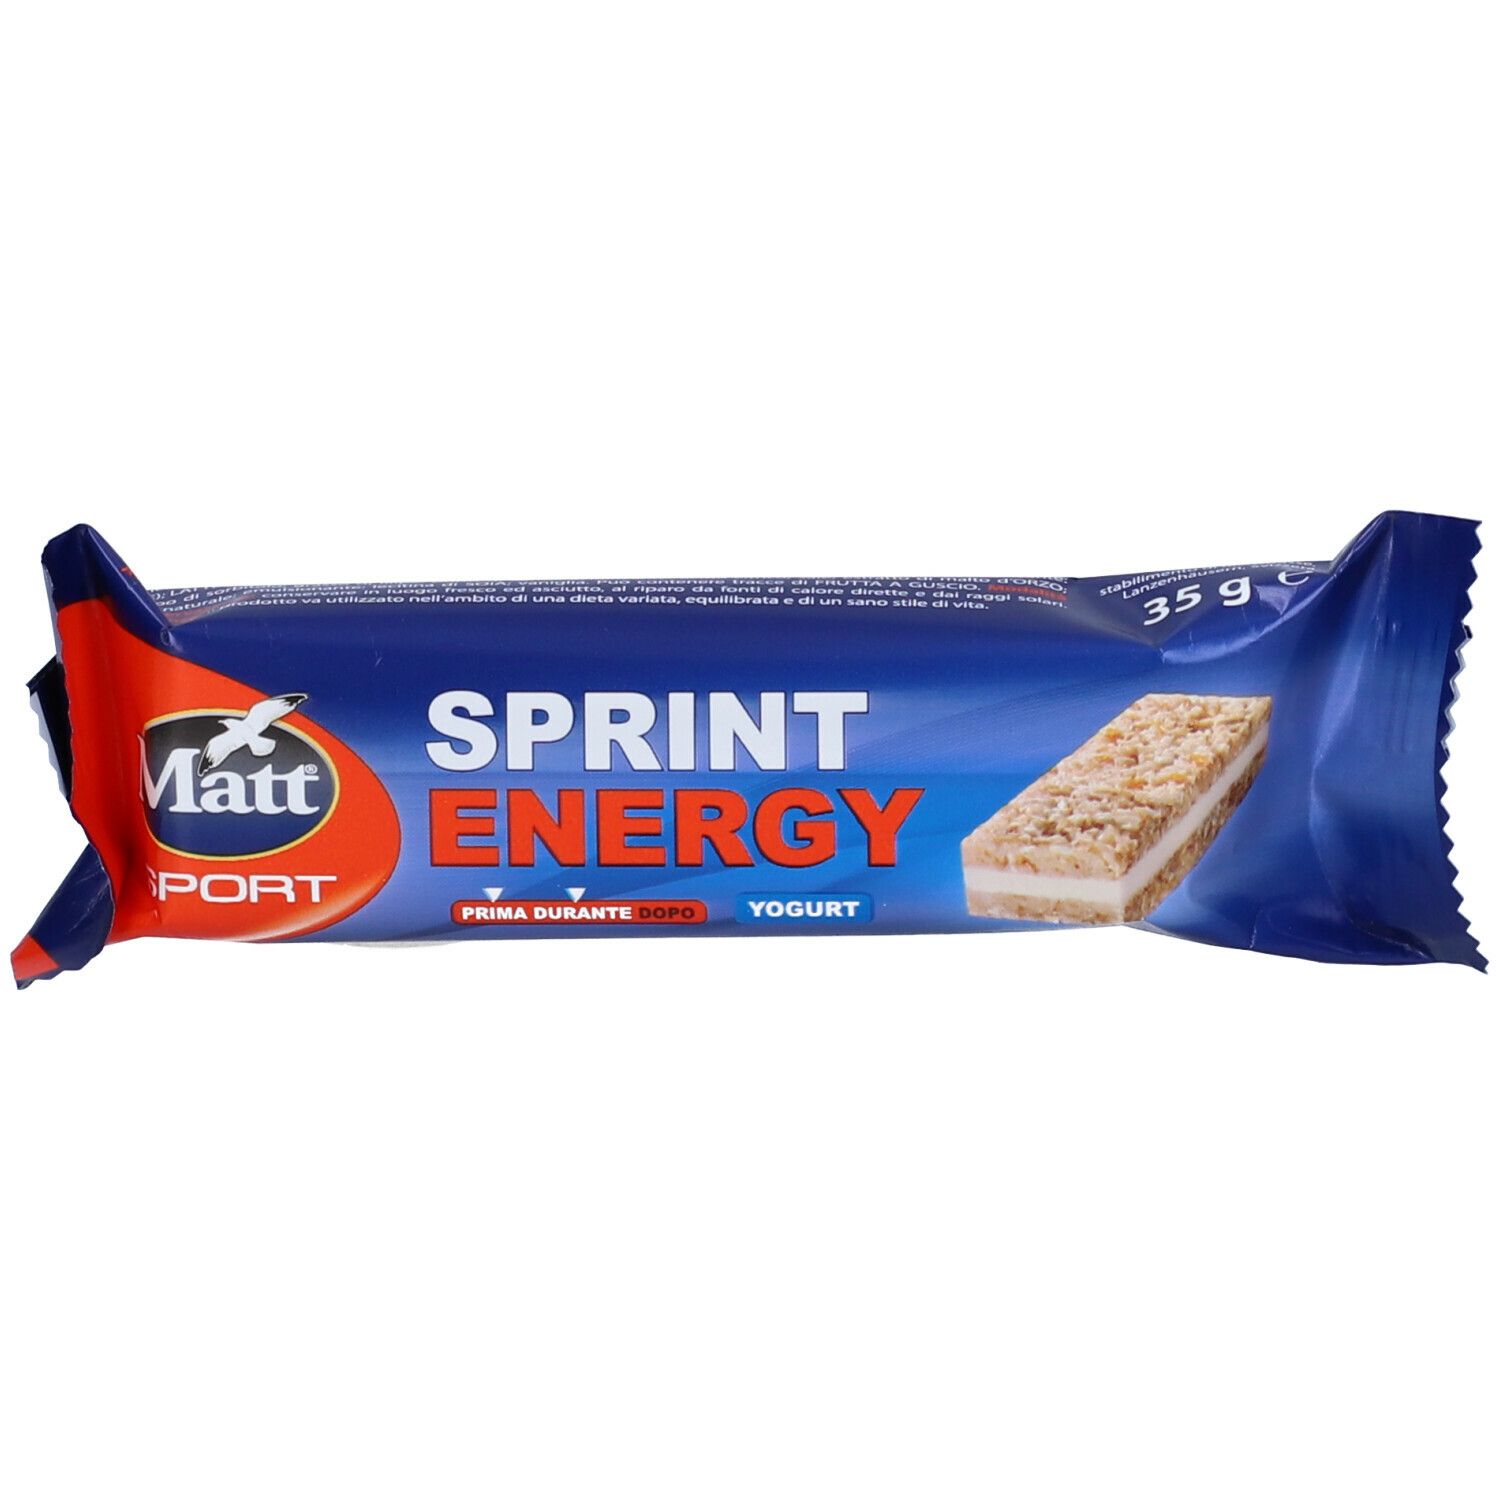 Image of MATT Sport Energy Sprint Yogurt